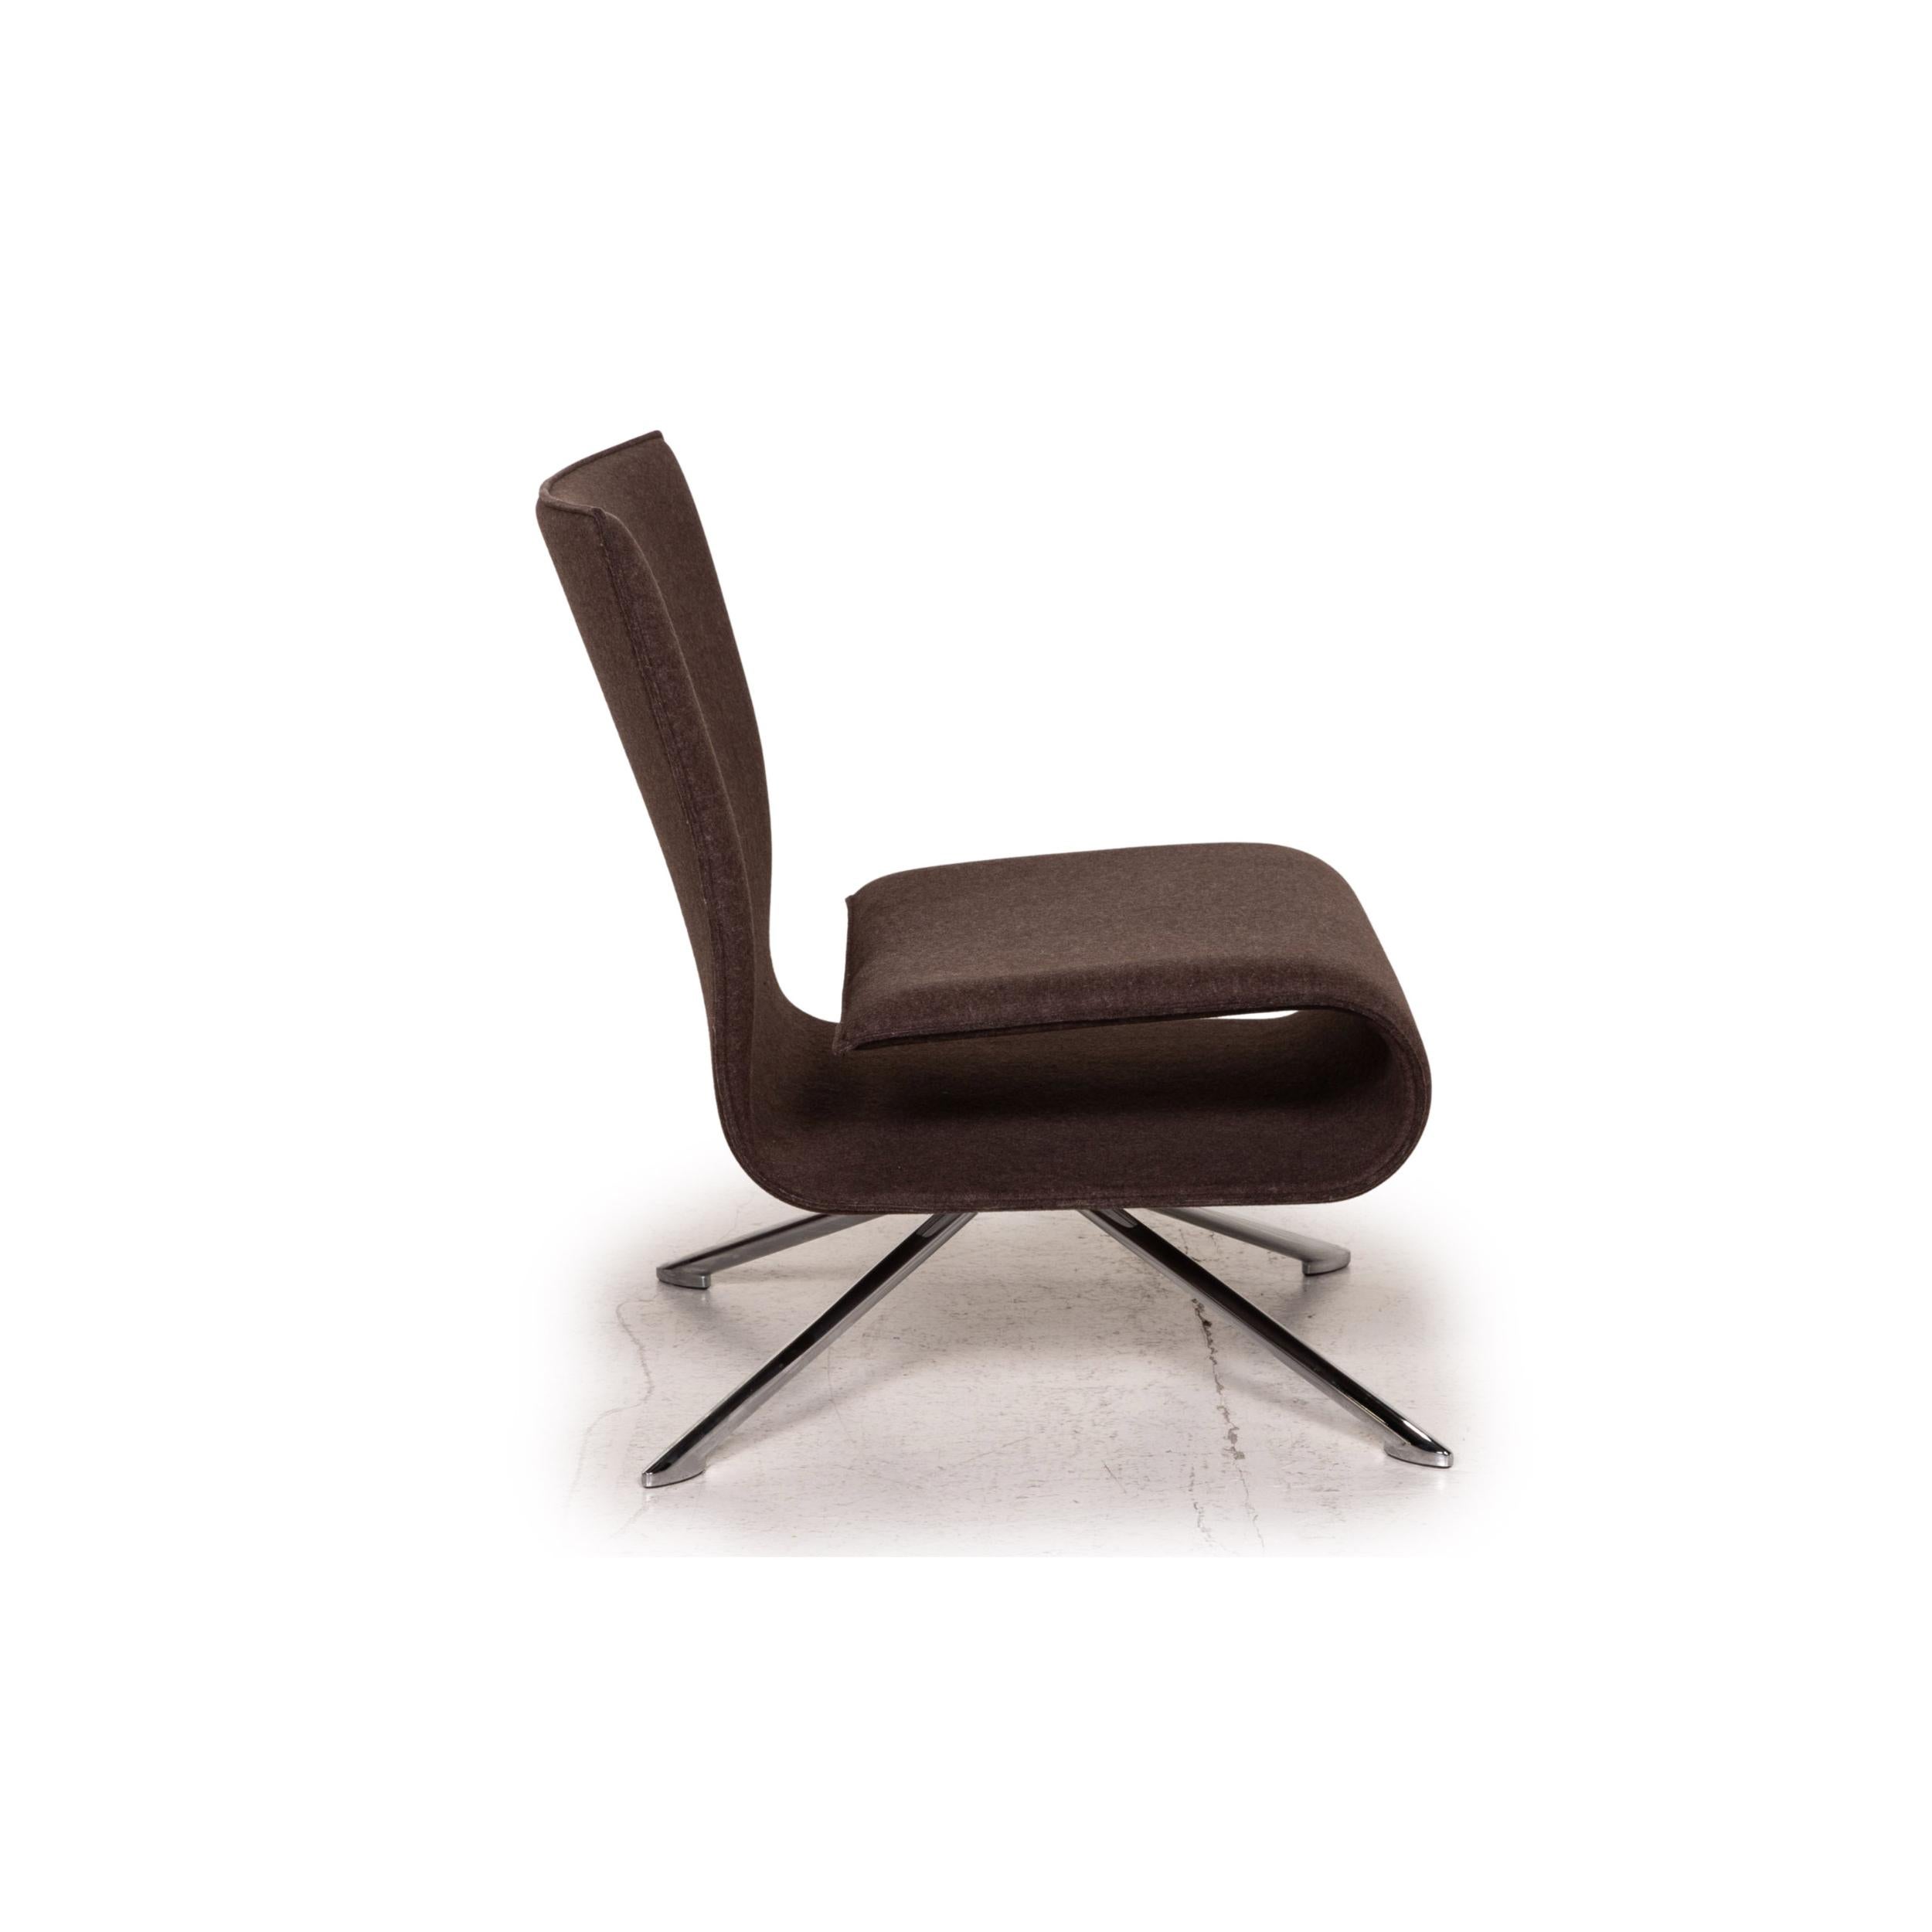 HOB Easychair by VERTIJET for COR Designer Armchair, Felt Fabric, Brown, Molded 1